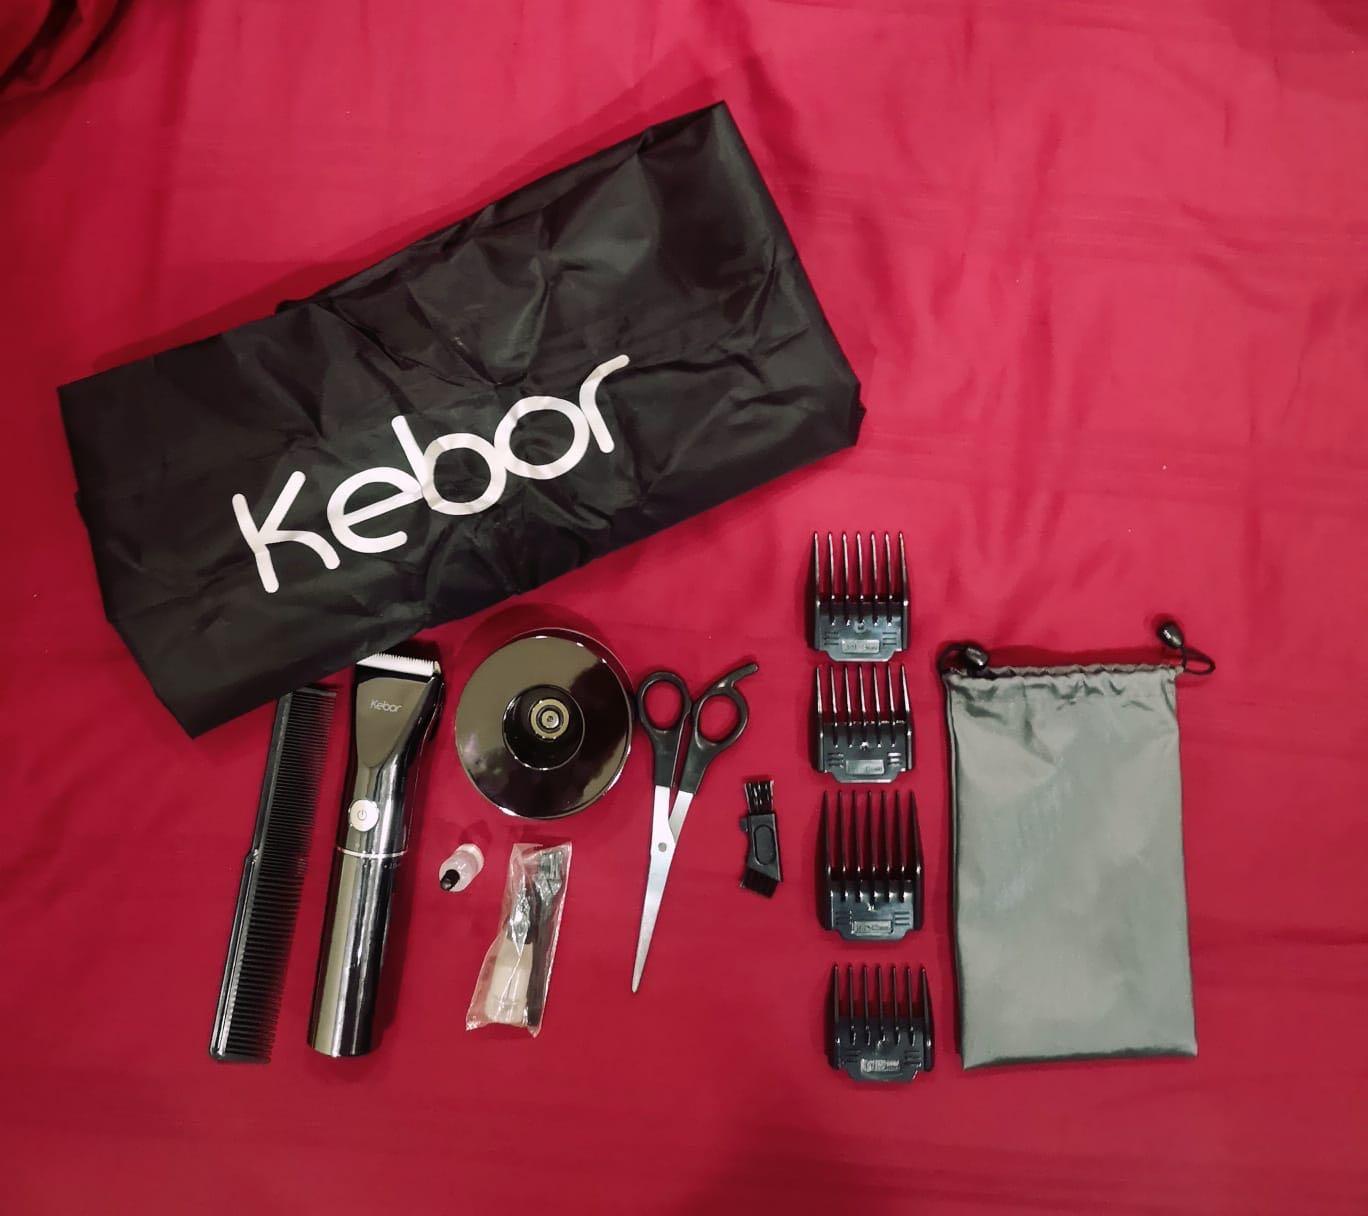 kebor hair clipper